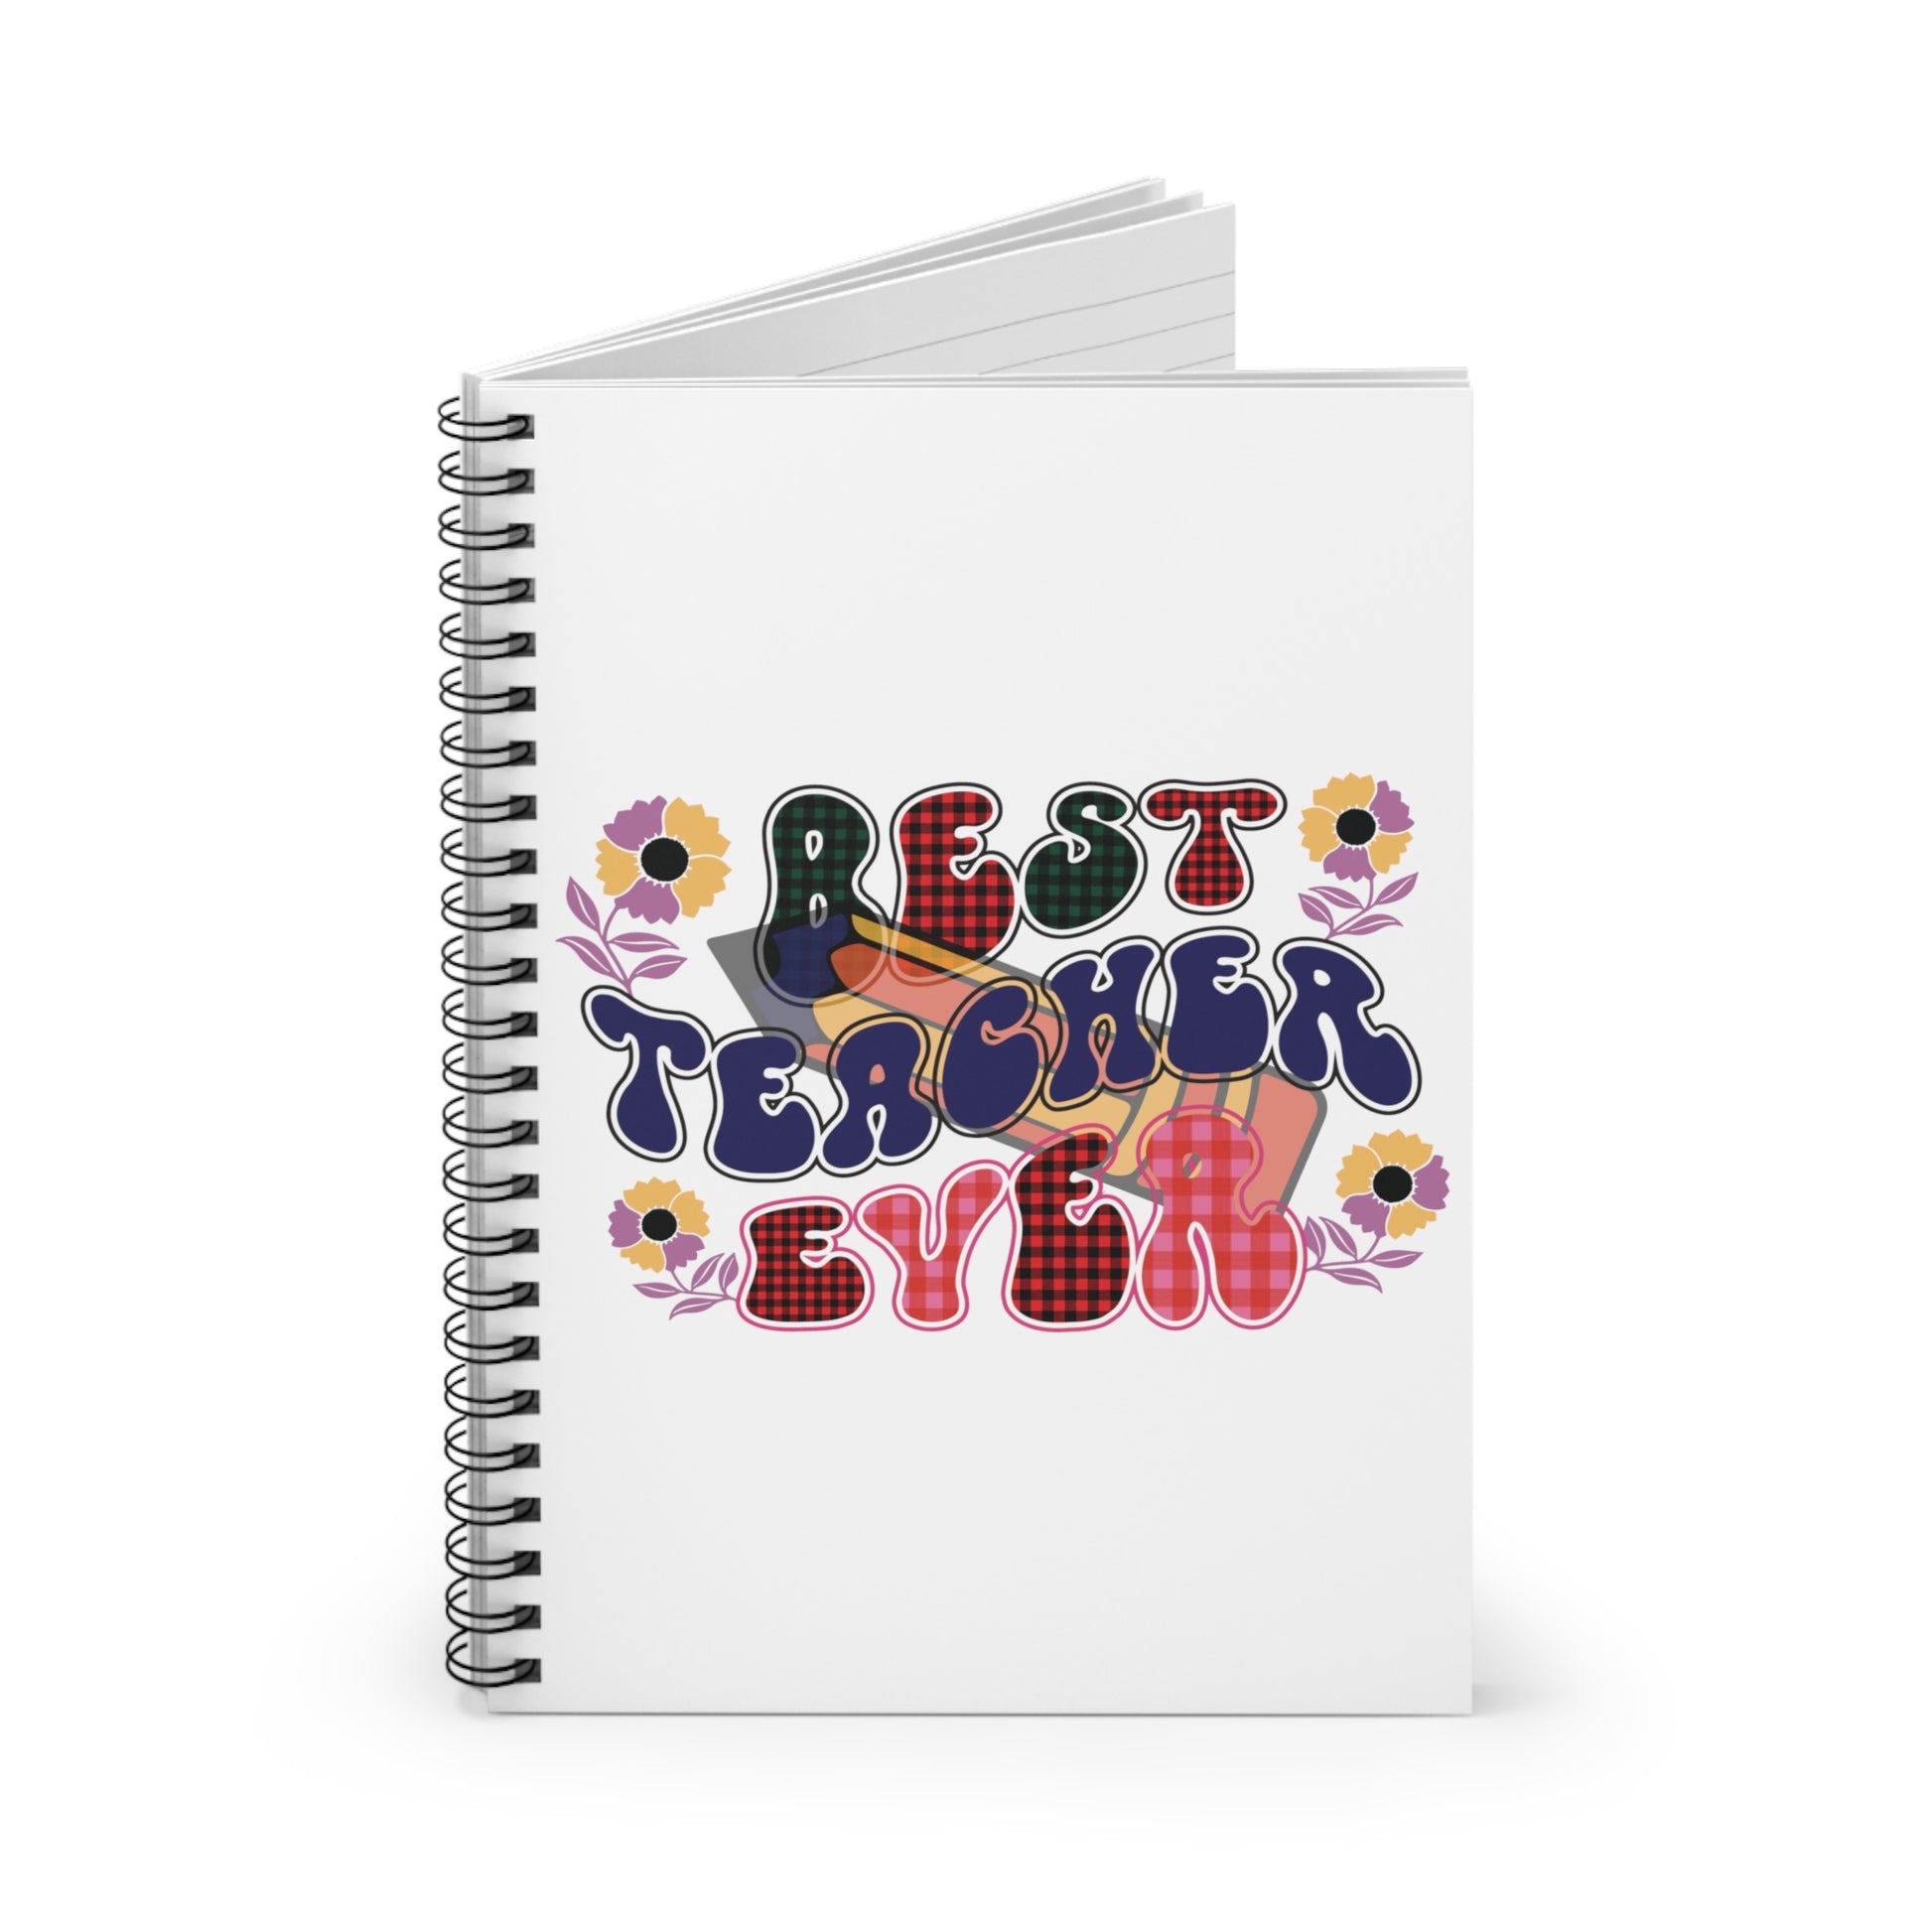 Best Teacher Ever: Spiral Notebook - Log Books - Journals - Diaries - and More Custom Printed by TheGlassyLass